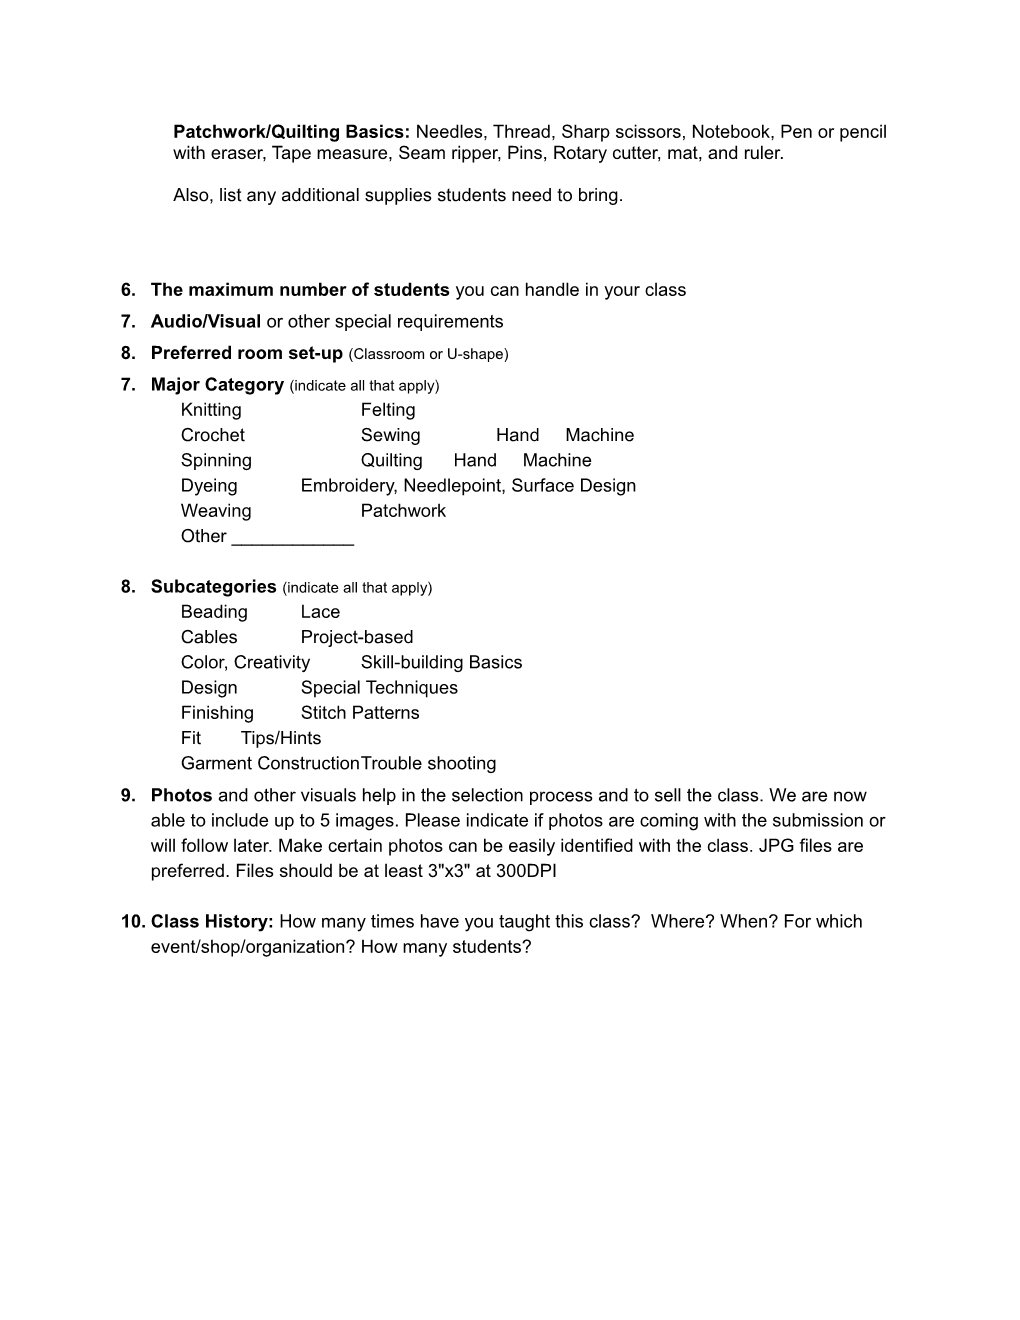 STITCHES Class Proposal Form